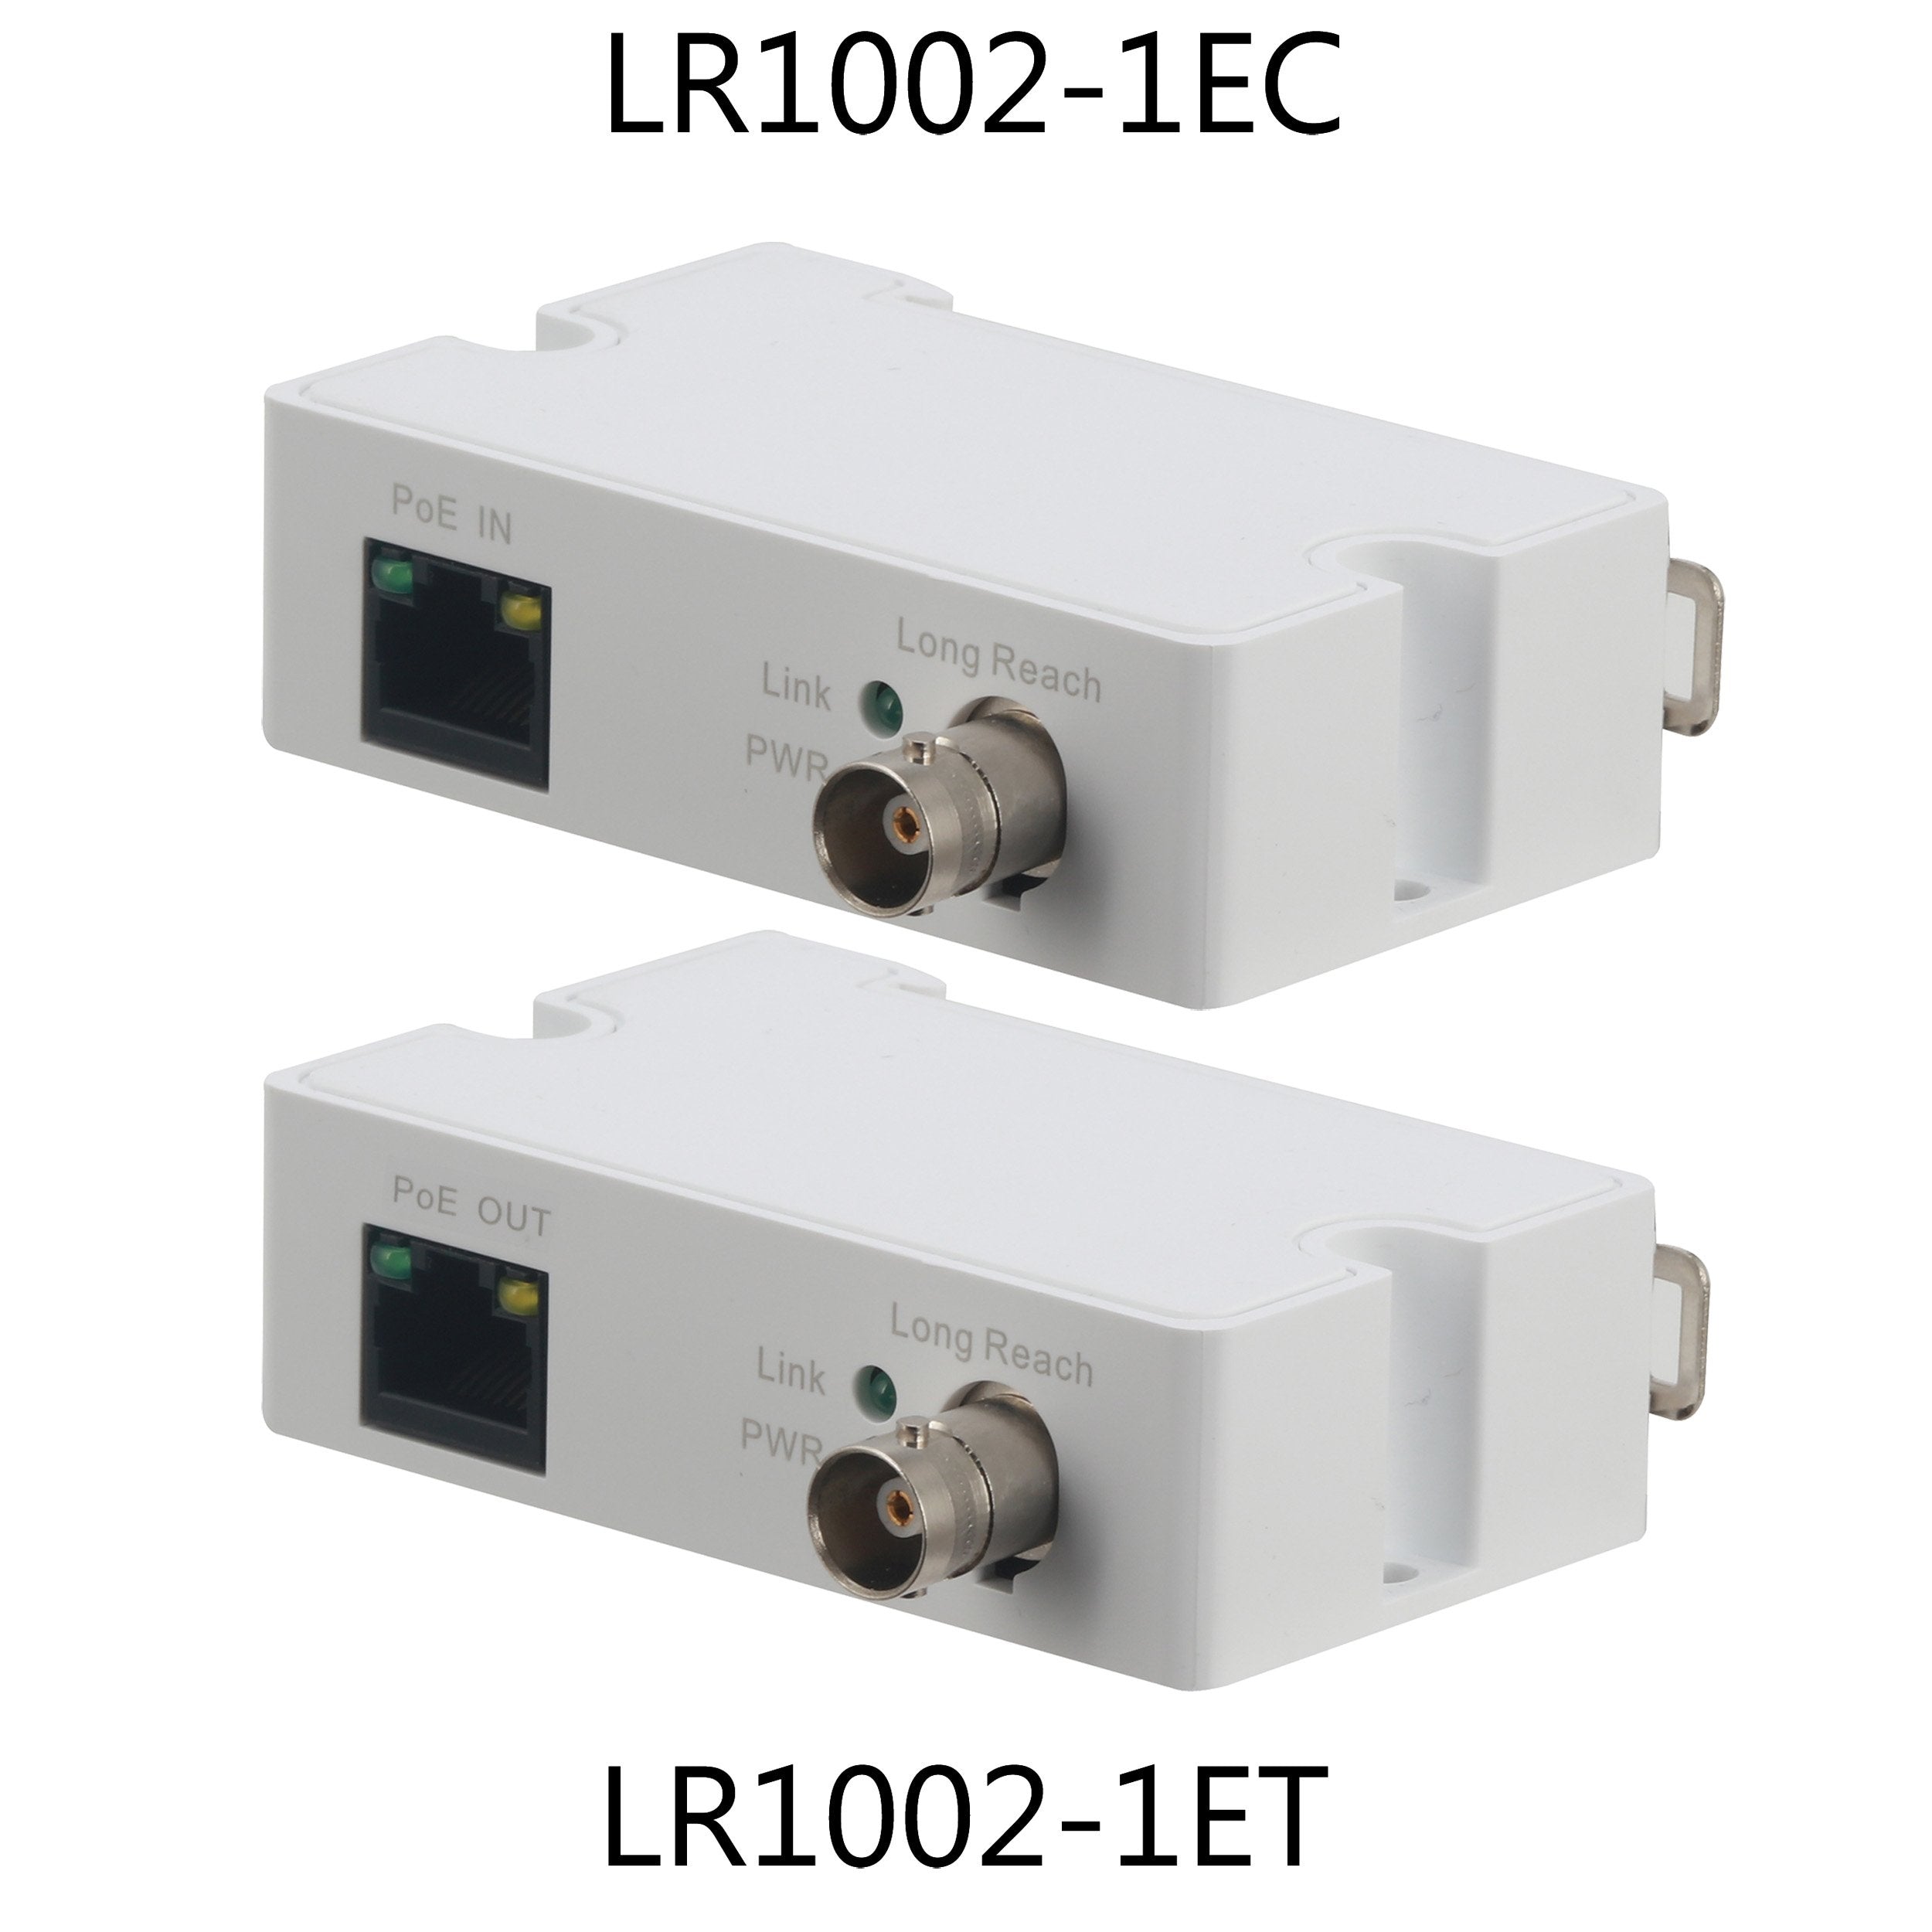 Dahua Single-Port Long Reach Ethernet Over Coax Extender Kit - 1 x DH-LR1002-1EC Receiver, 1 x DH-LR1002-1ET Transmitter